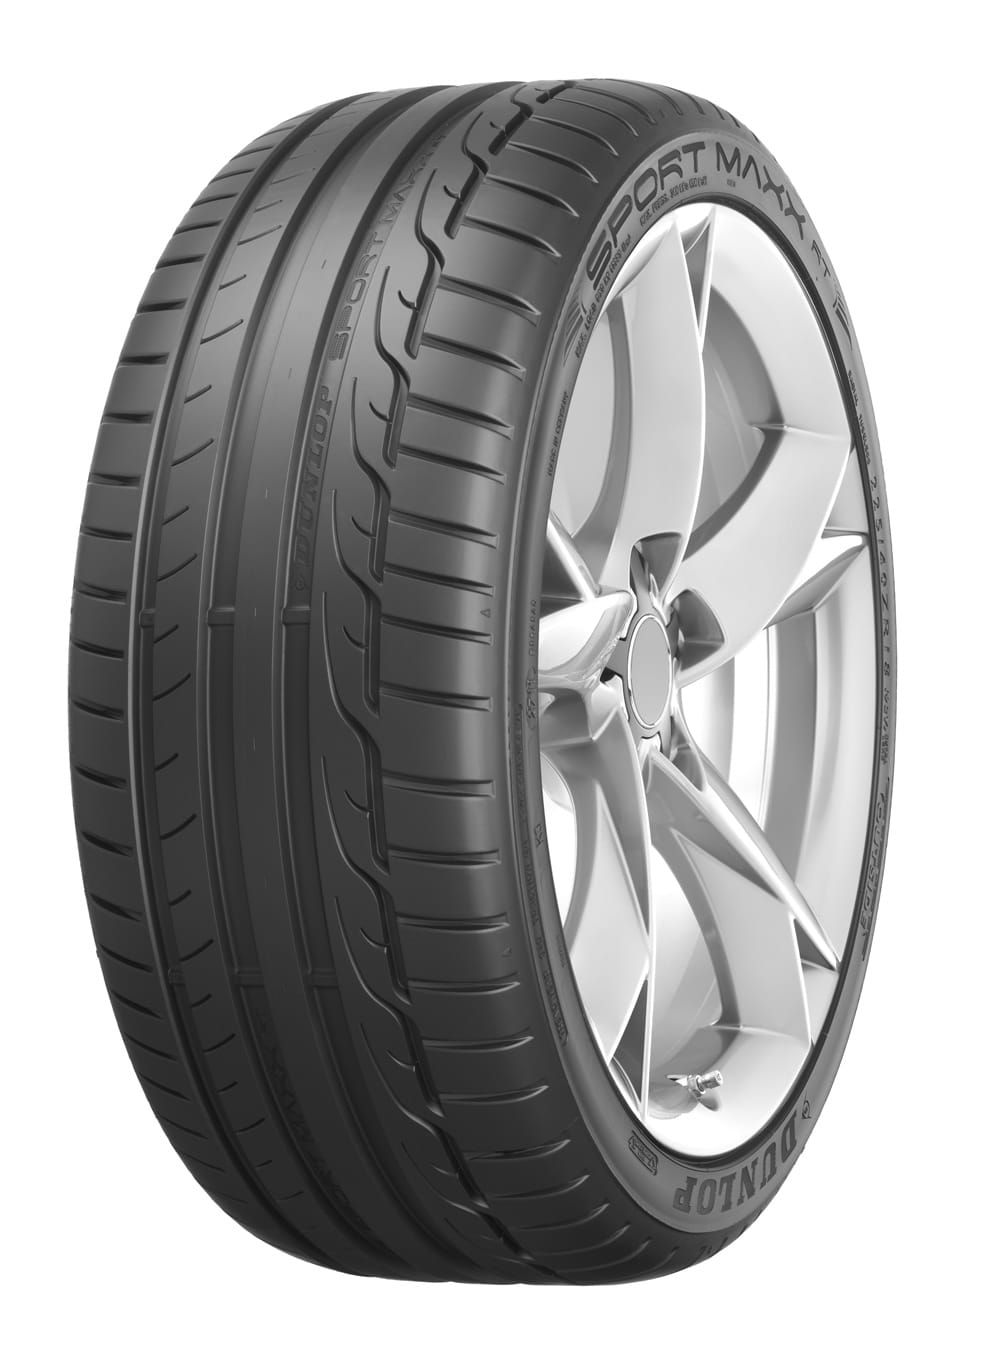 Gomme Nuove Dunlop 225/55 R16 99Y SPORT MAXX RT MFS XL pneumatici nuovi Estivo